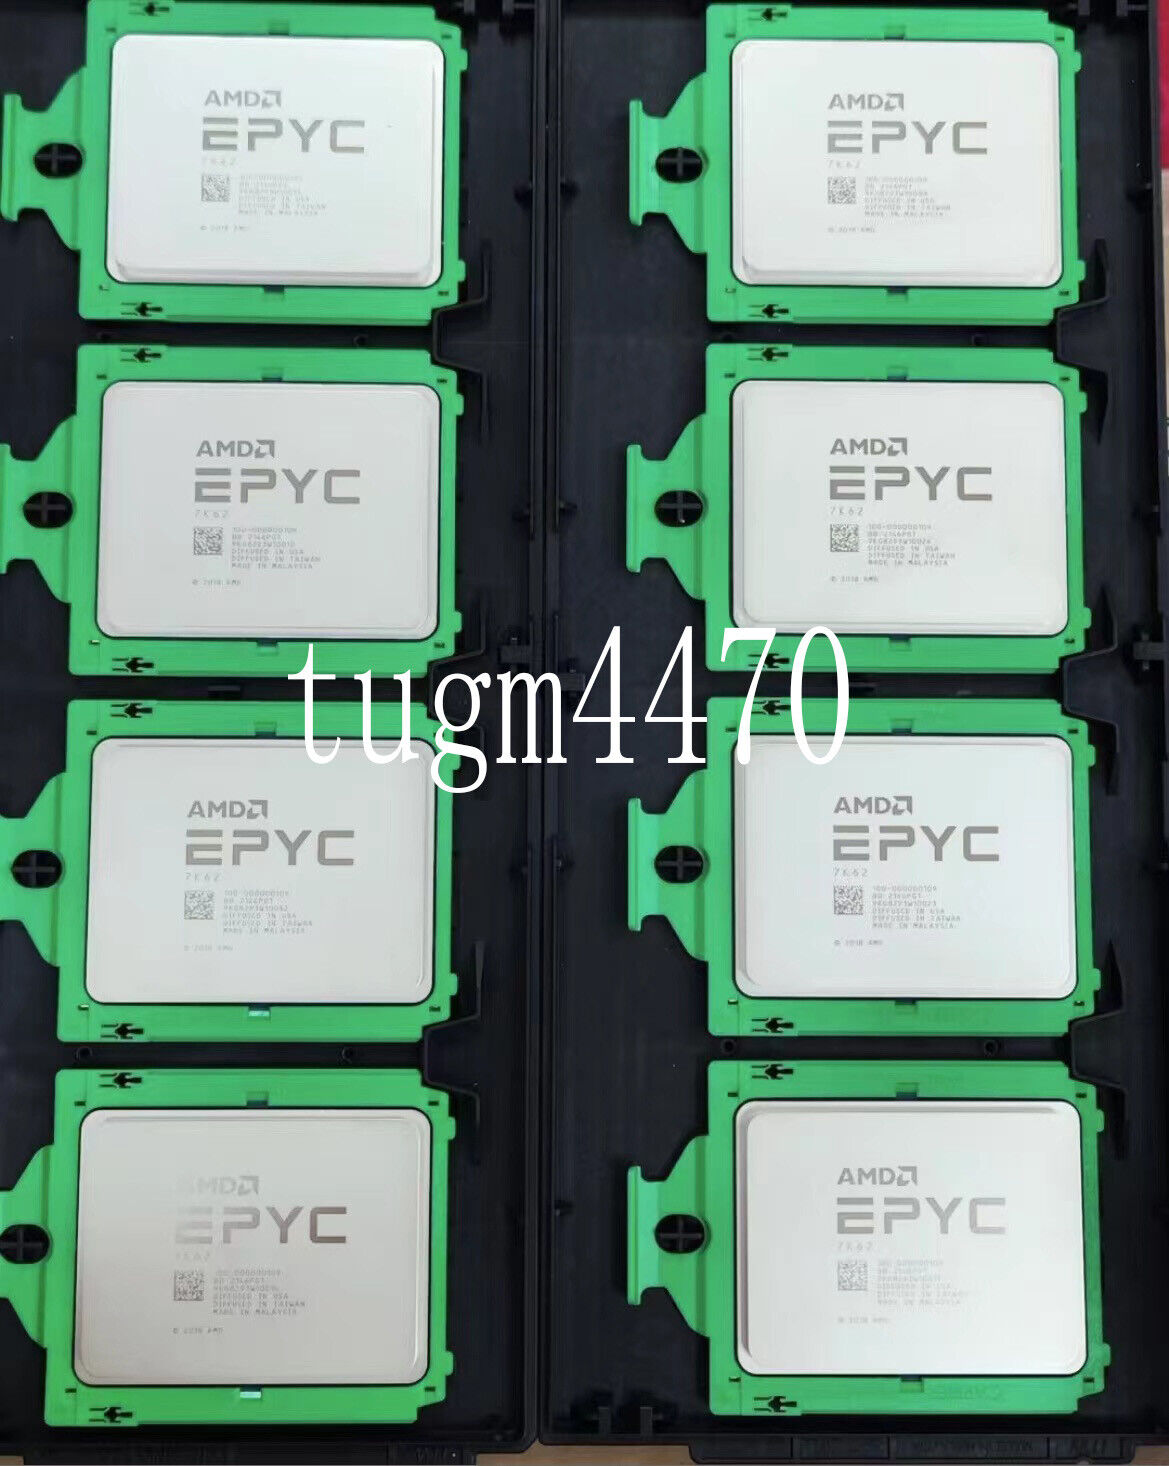 AMD epyc 7k62 CPUprocessor 48 cores 96 threads base clock 2.6ghz 3.3ghz